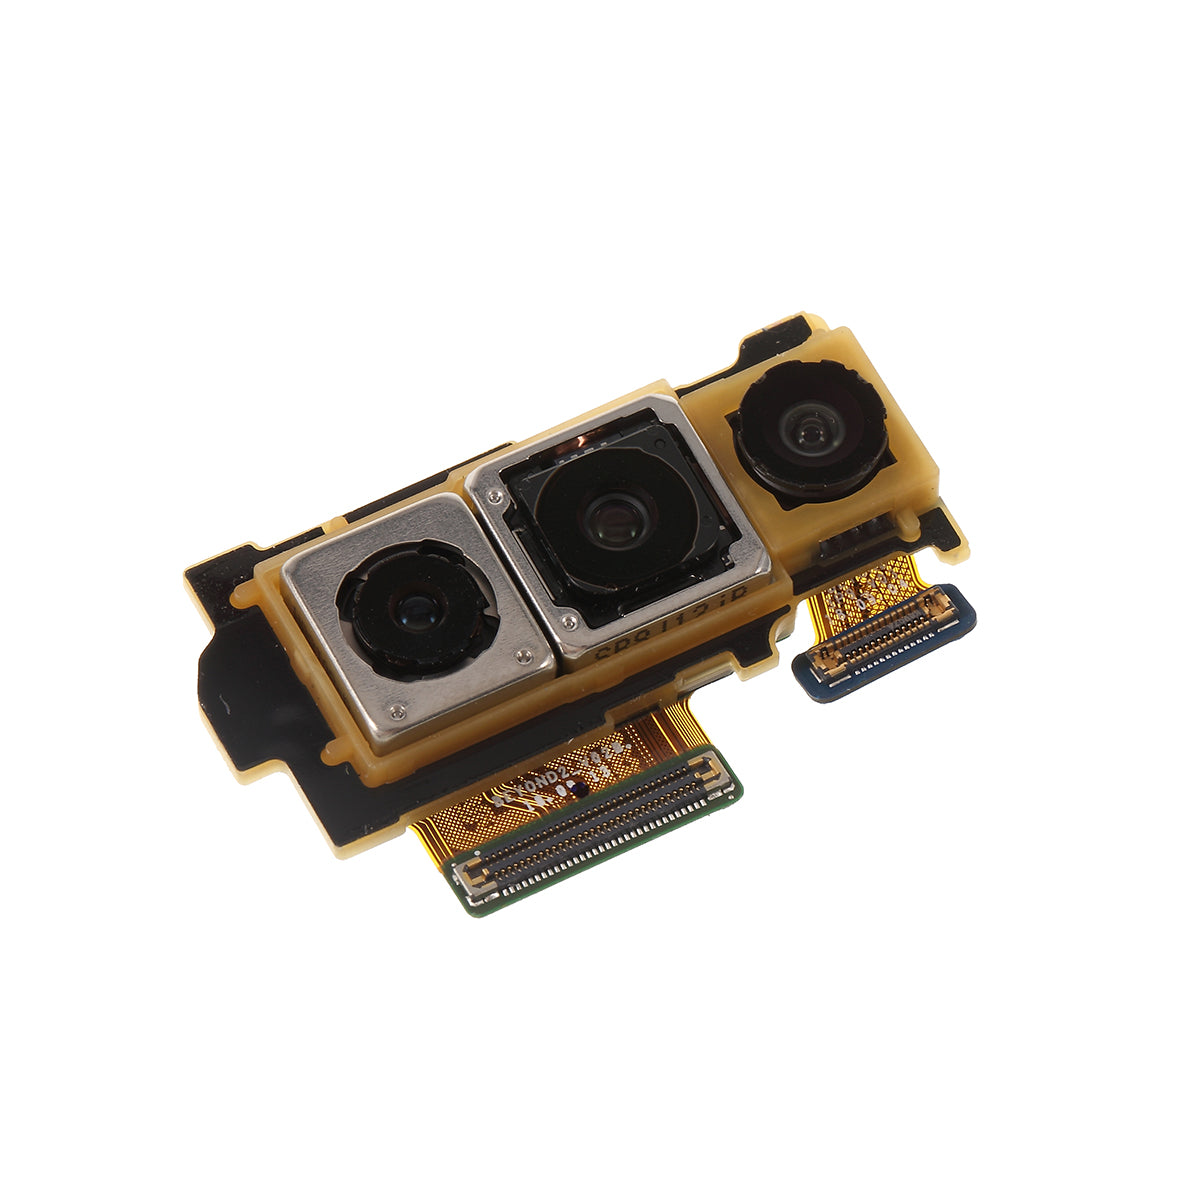 OEM Rear Back Camera Module Replace Part for Samsung Galaxy S10 Plus G975U / S10 G973U (US Version)